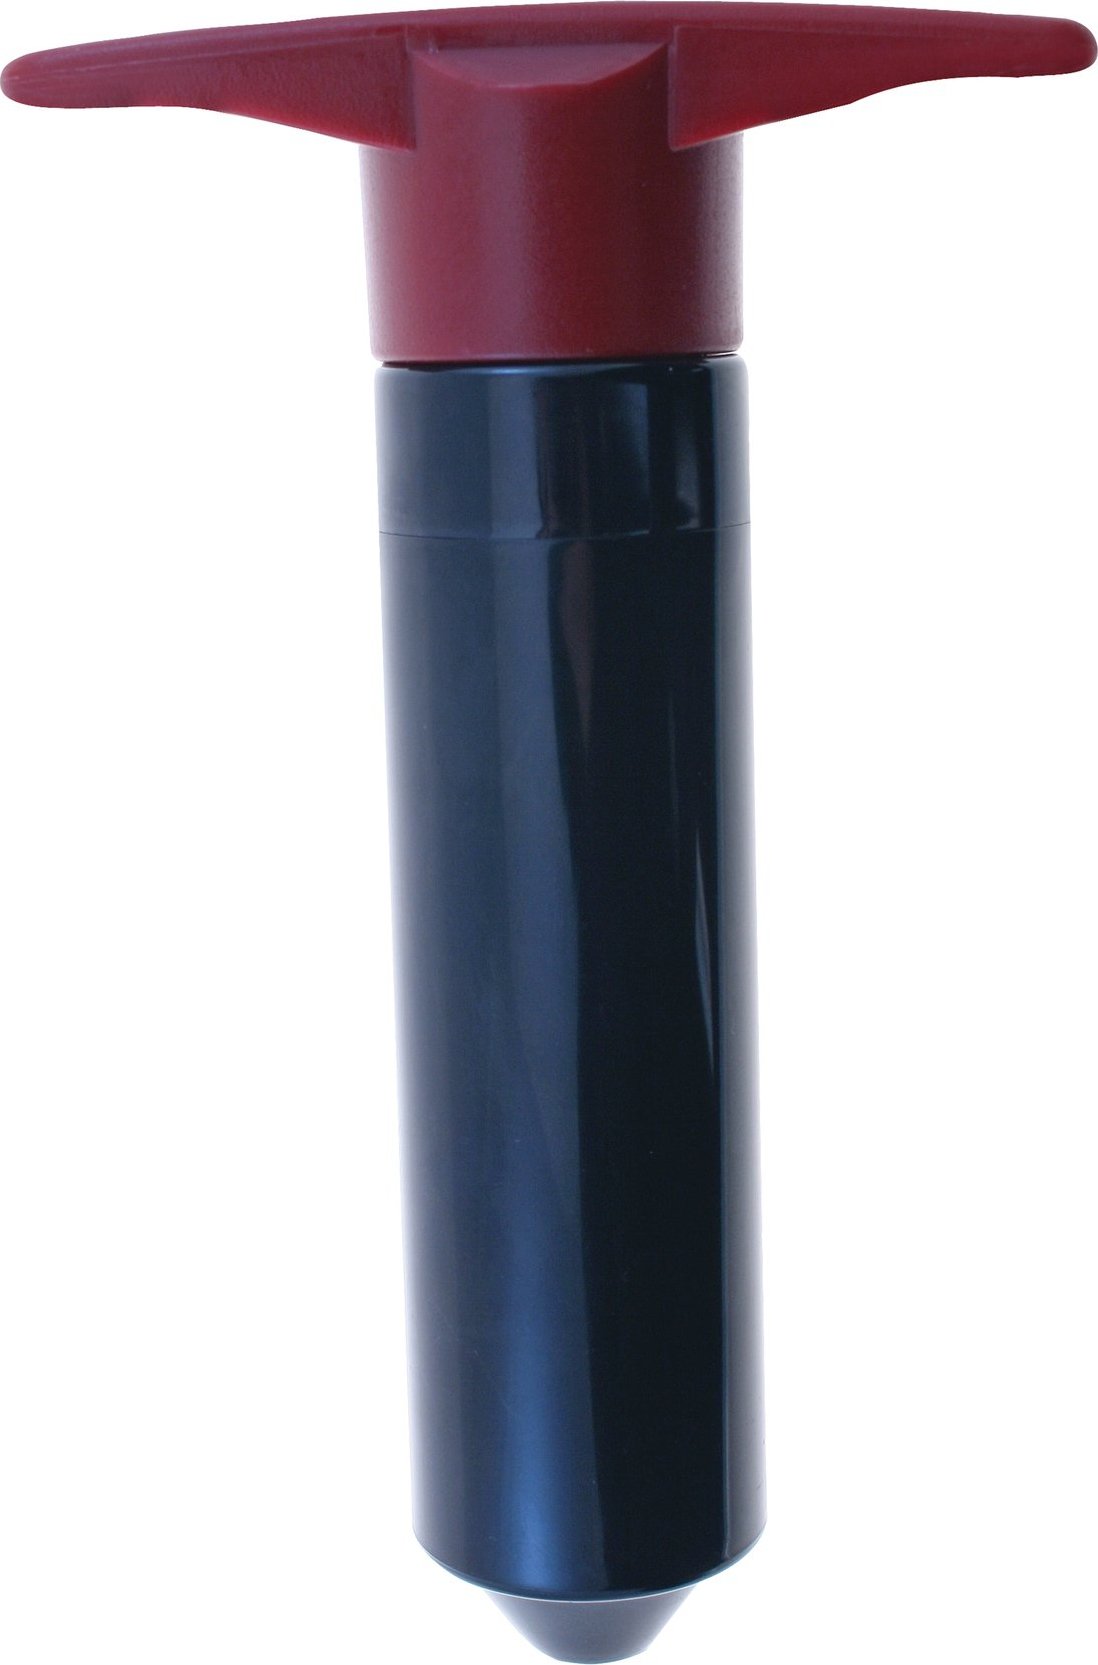 Swissmar - Epivac Wine Saver Vacuum Pump Black/Burgundy - 71009